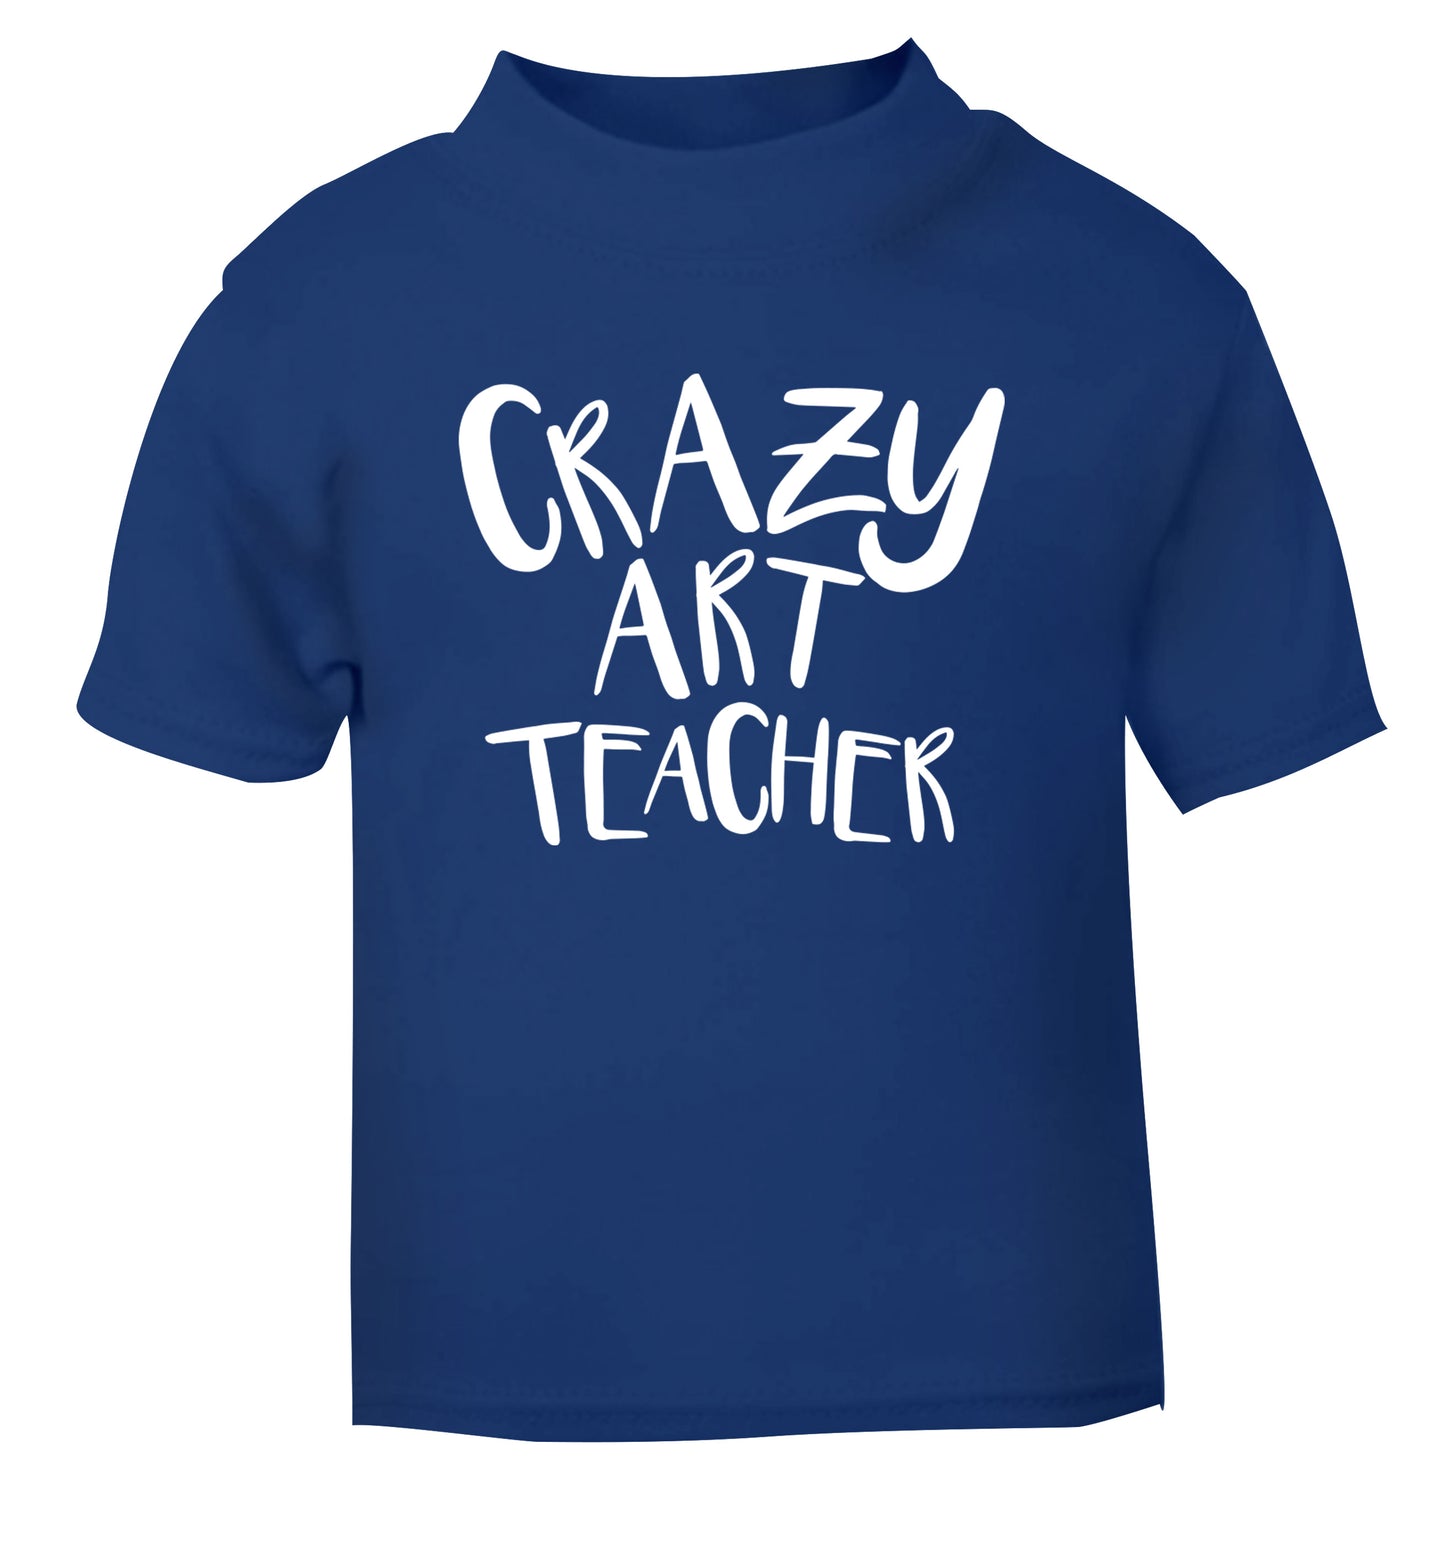 Crazy art teacher blue Baby Toddler Tshirt 2 Years